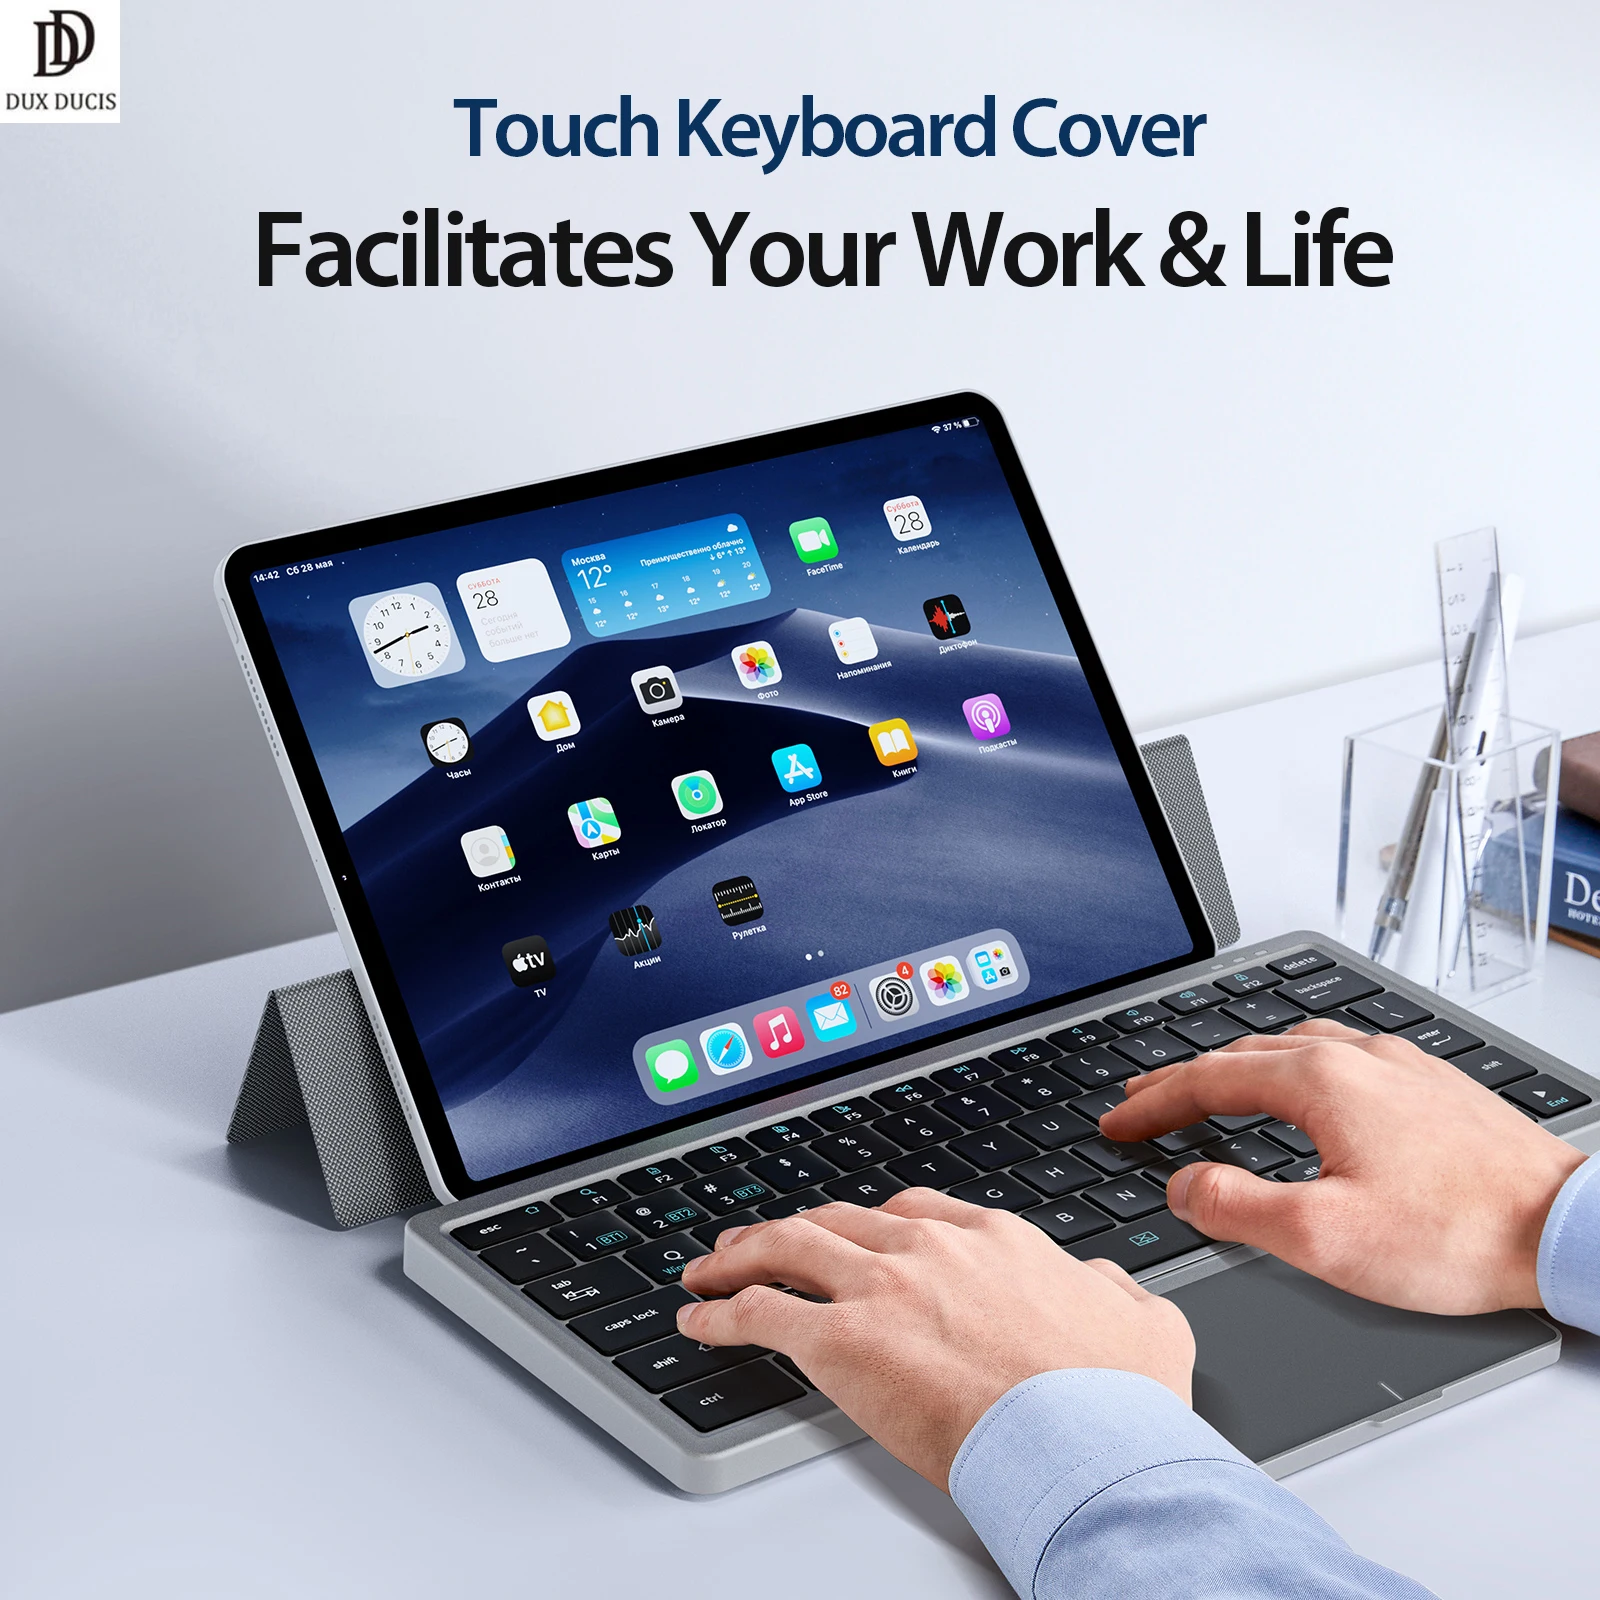 

DUXDUCIS for iPad/iPhone/Macbook/Tablet Multi-device Wireless Keyboard+Touch-Board+Kickstand-Case 3-in-1 Wireless Keyboard Cover